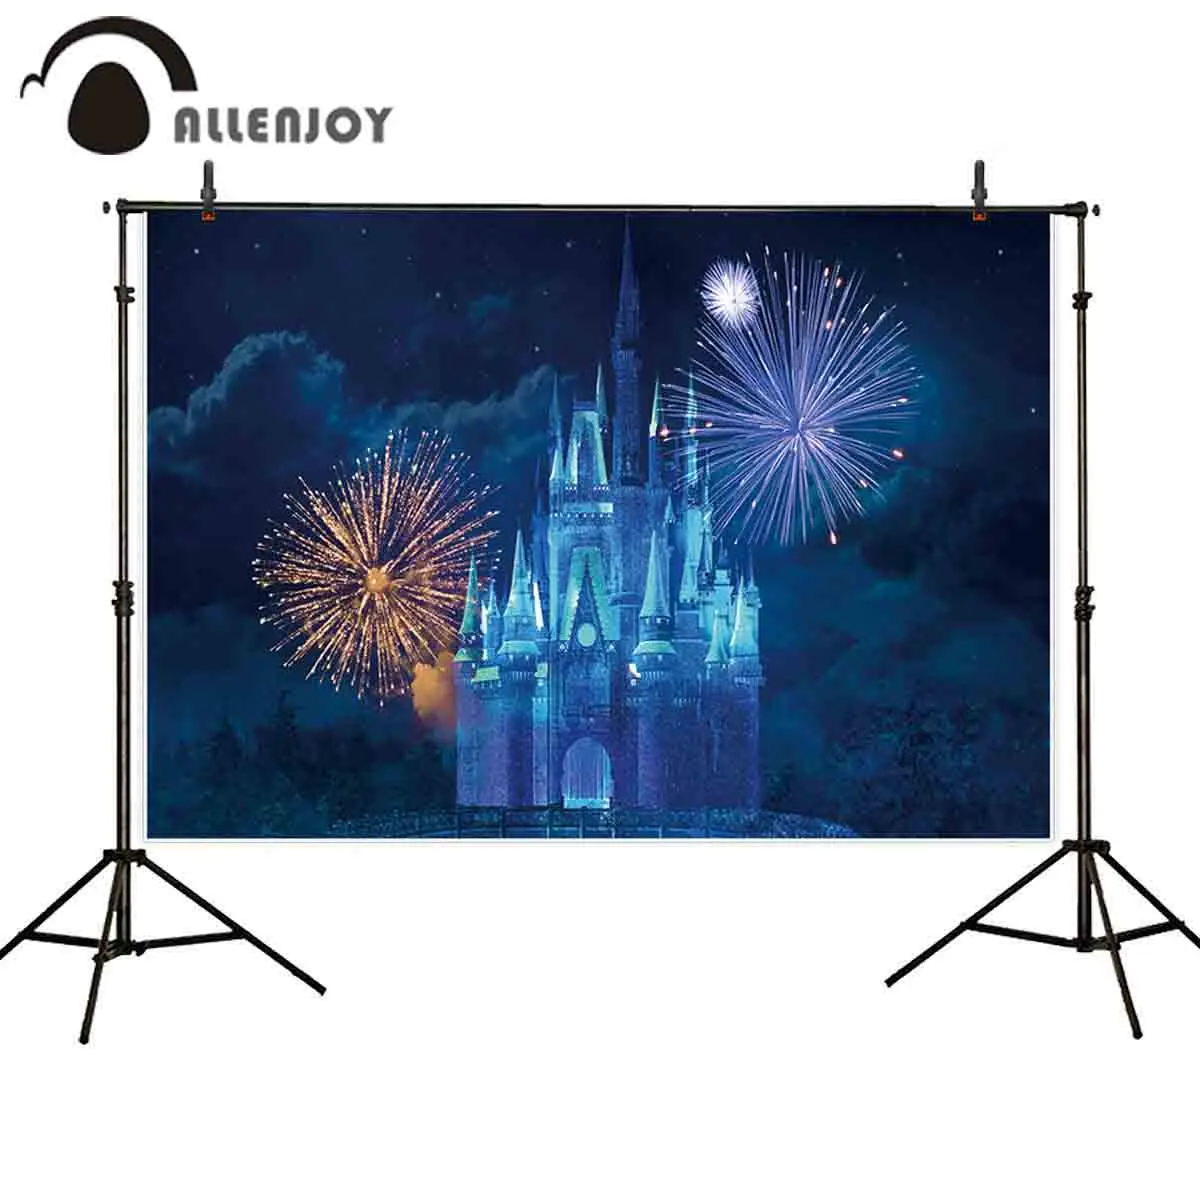 

Allenjoy castle photography backdrop night fireworks fairy tale princess background photobooth studio shoot prop decor banner